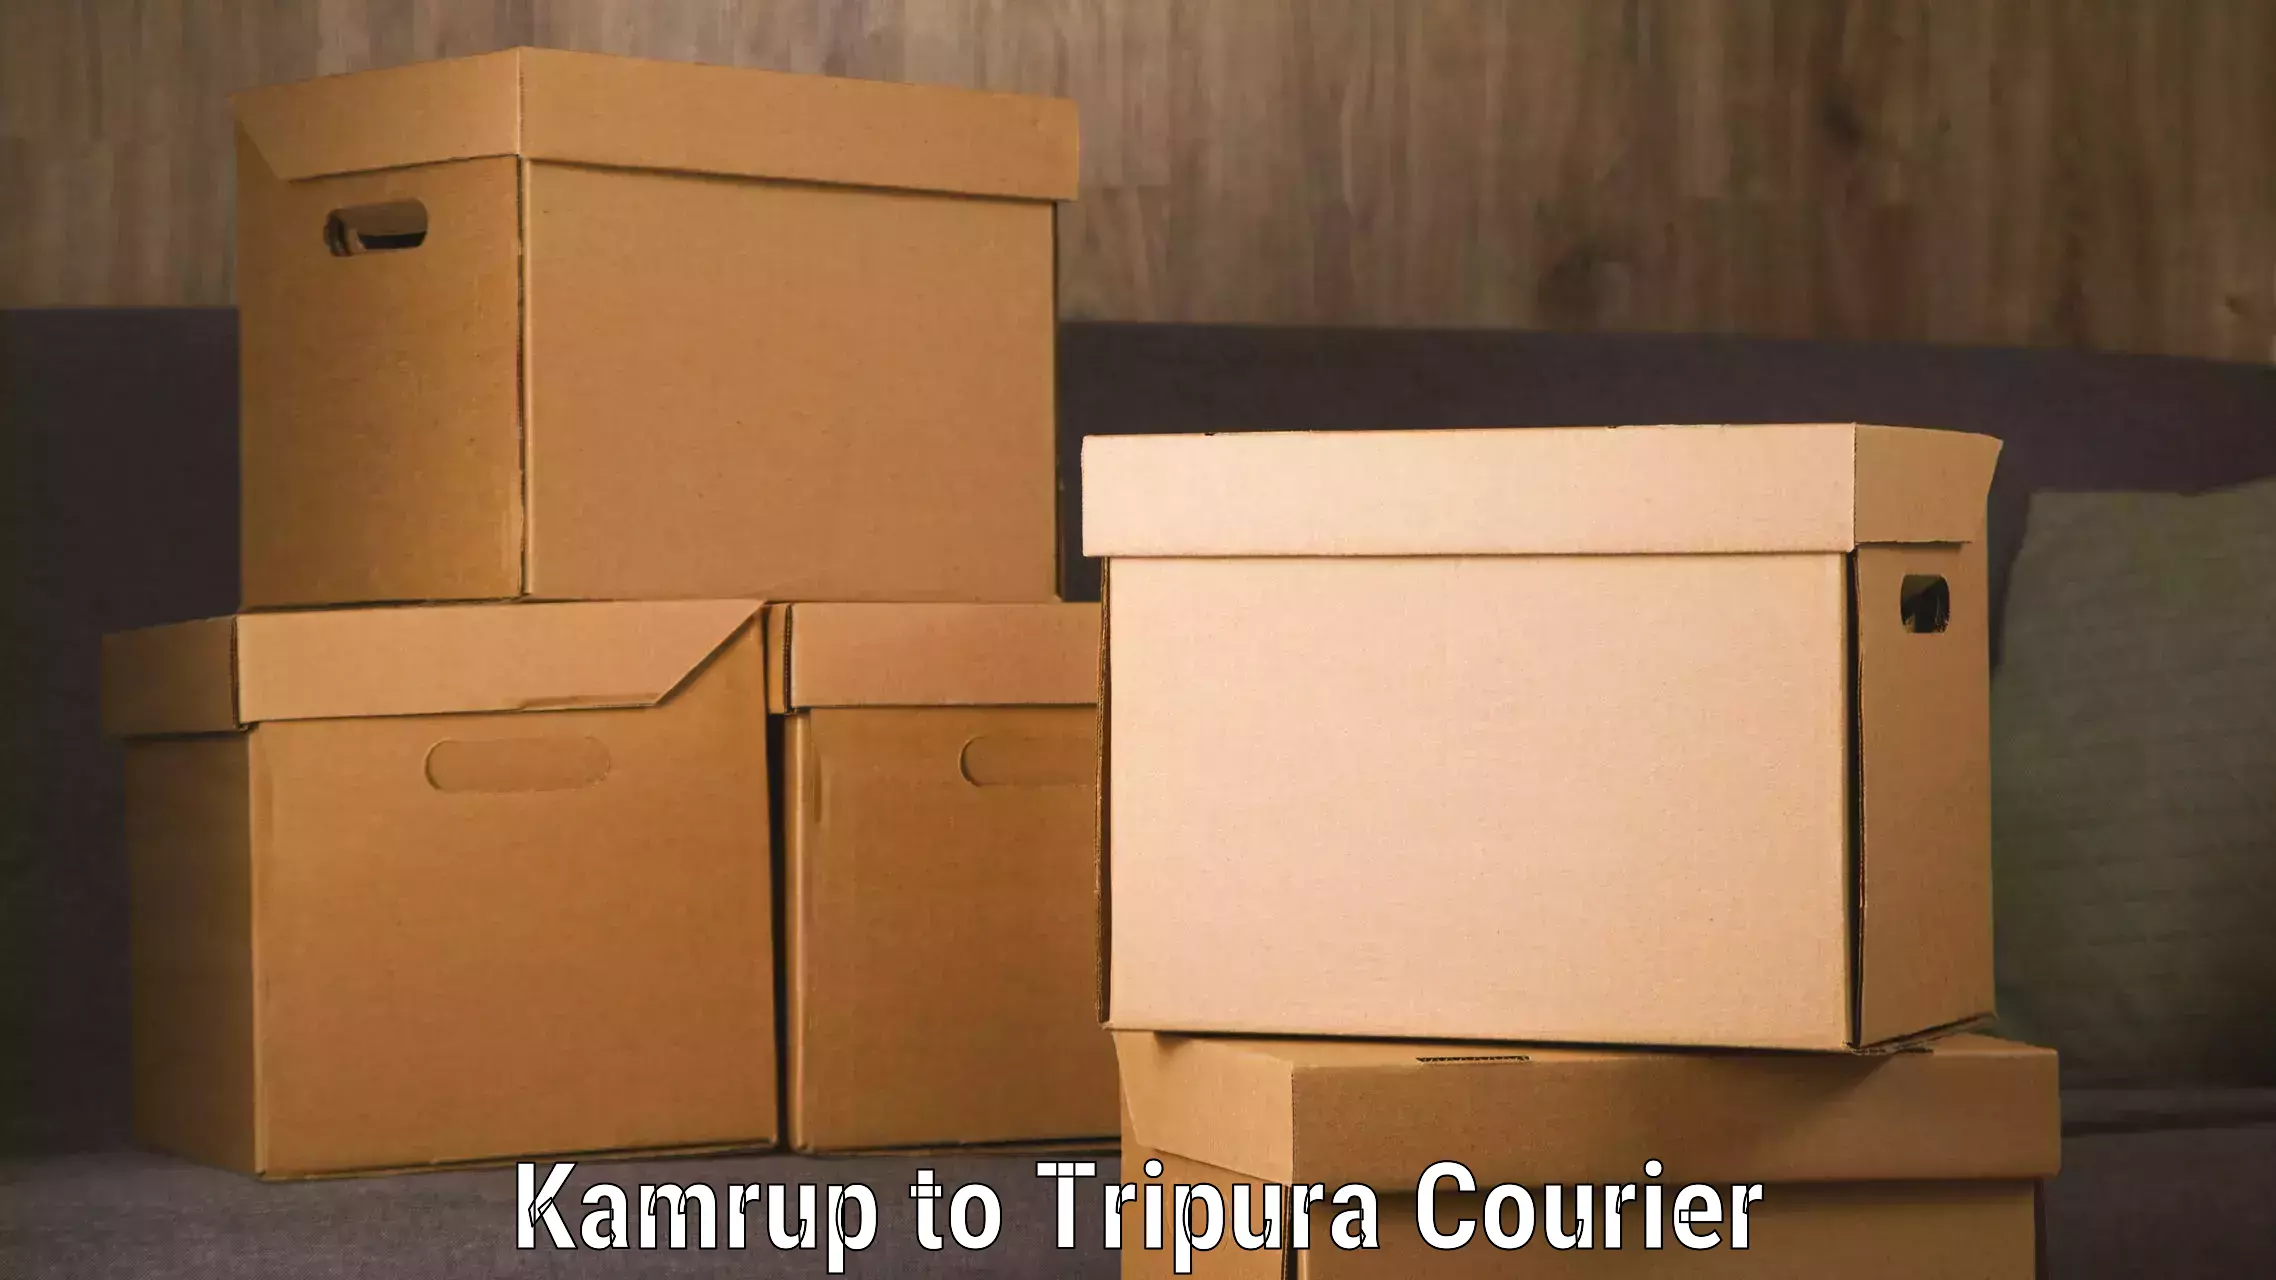 Same day luggage service Kamrup to Amarpur